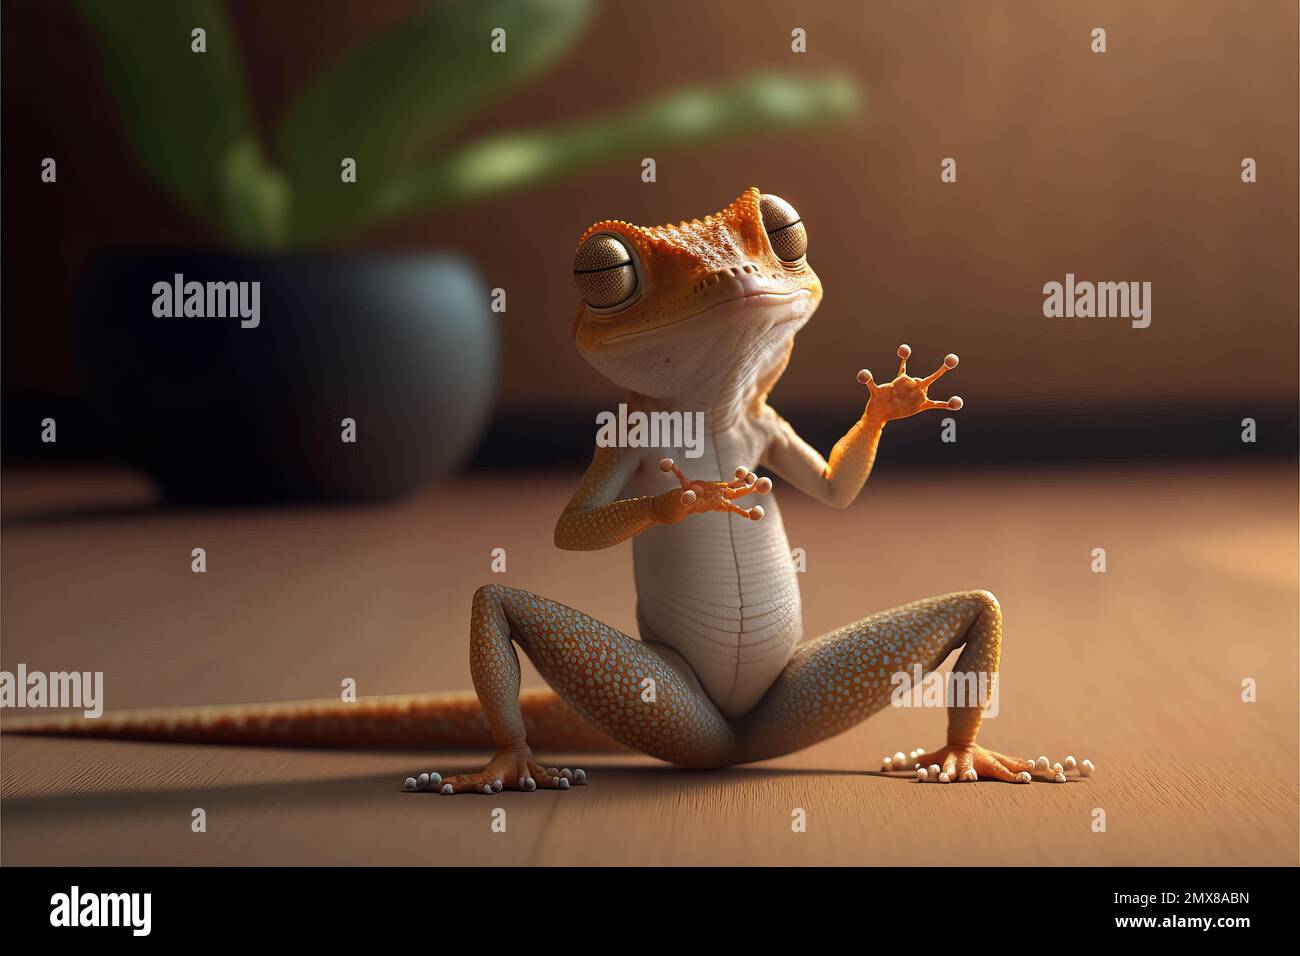 Lizard doing fun and funny yoga poses Stock Photo - Alamy